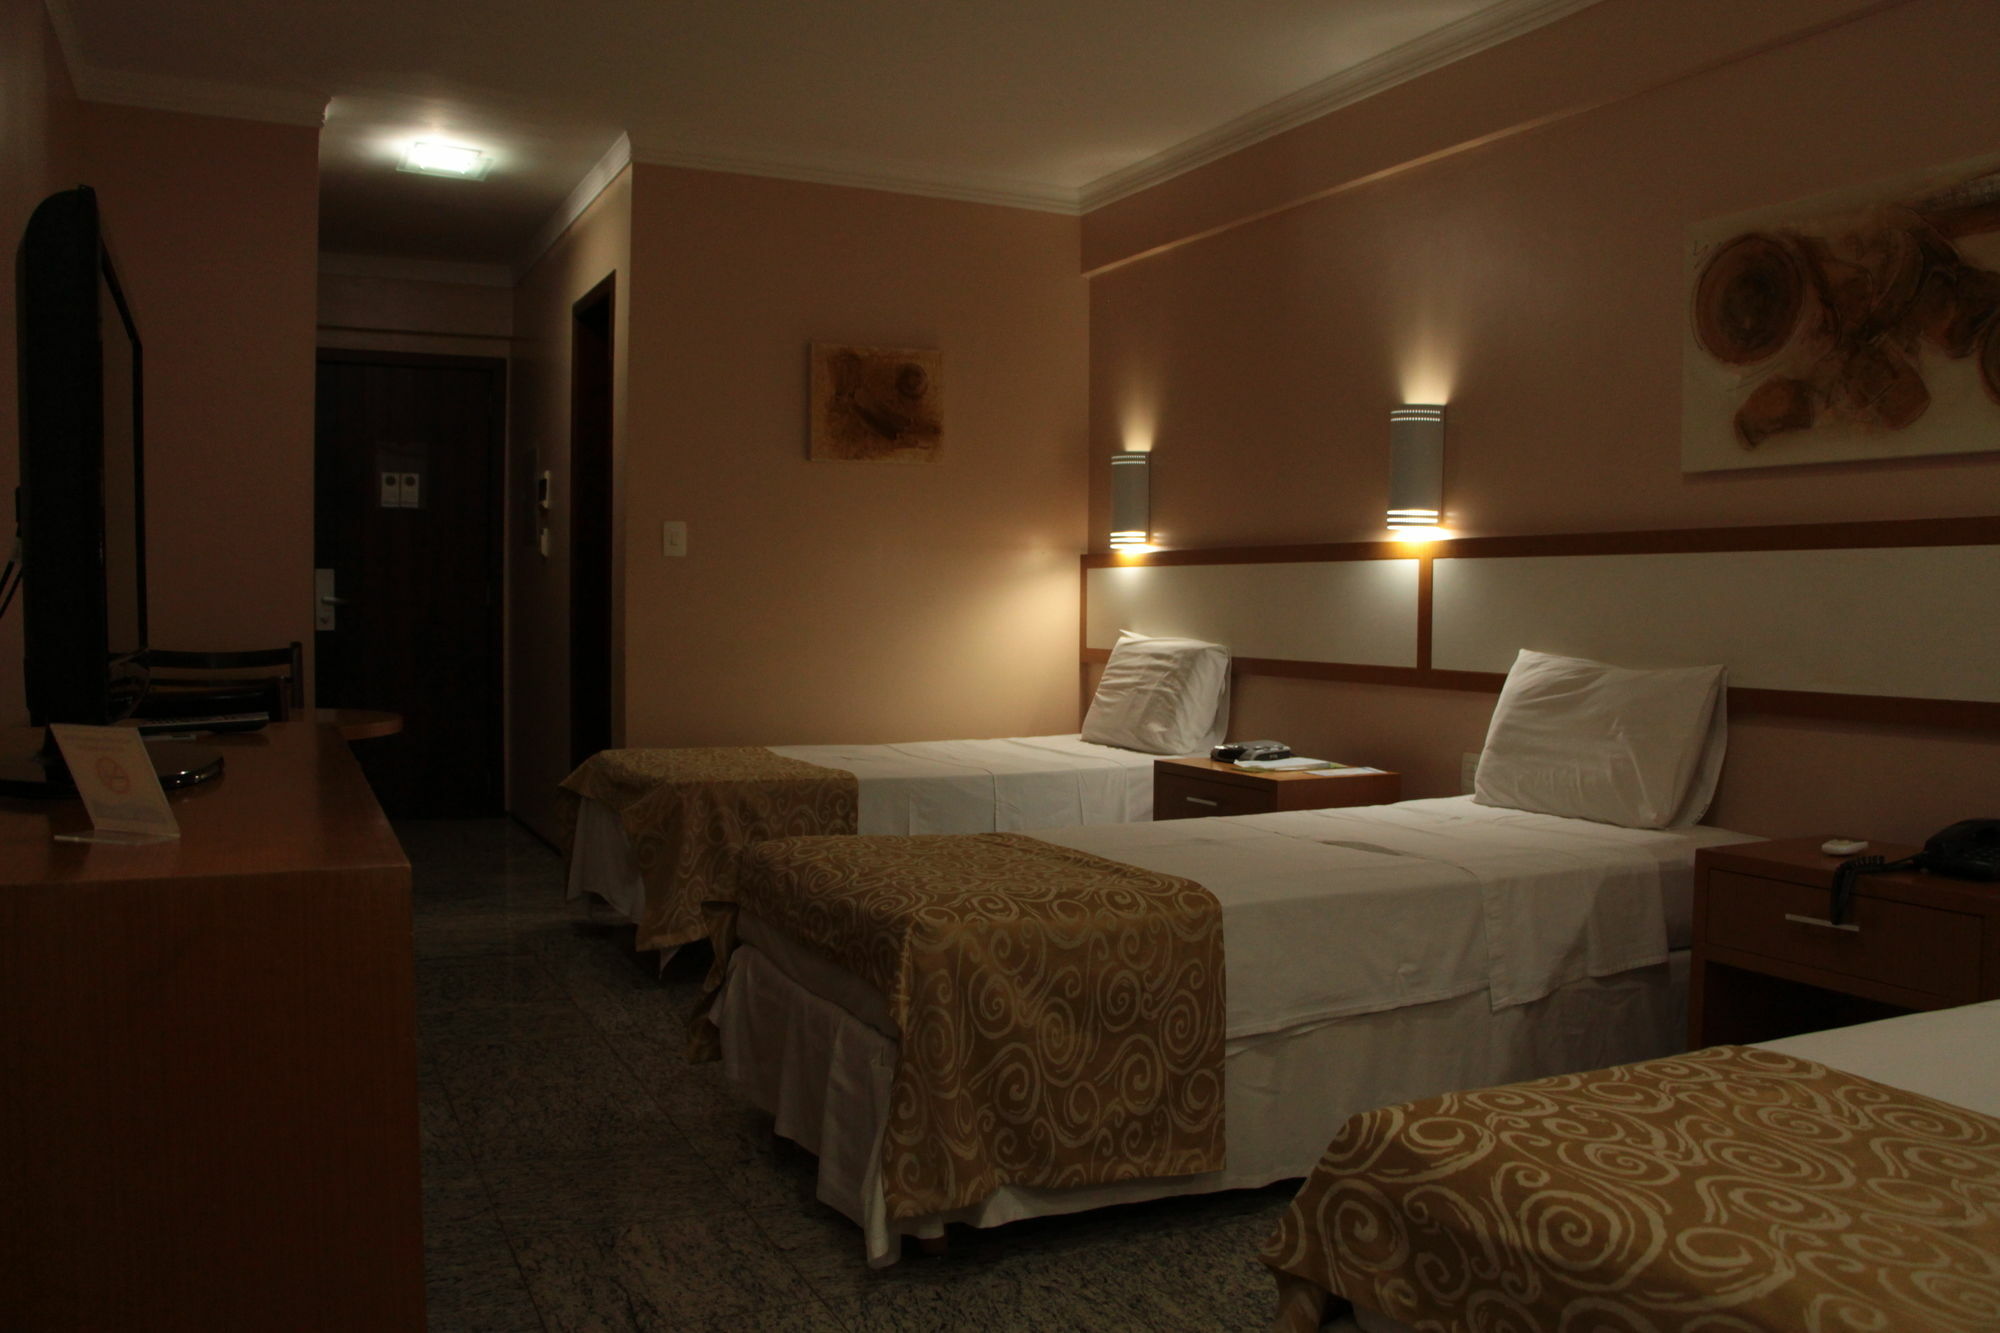 Costa Atlantico Hotel サンルイス エクステリア 写真